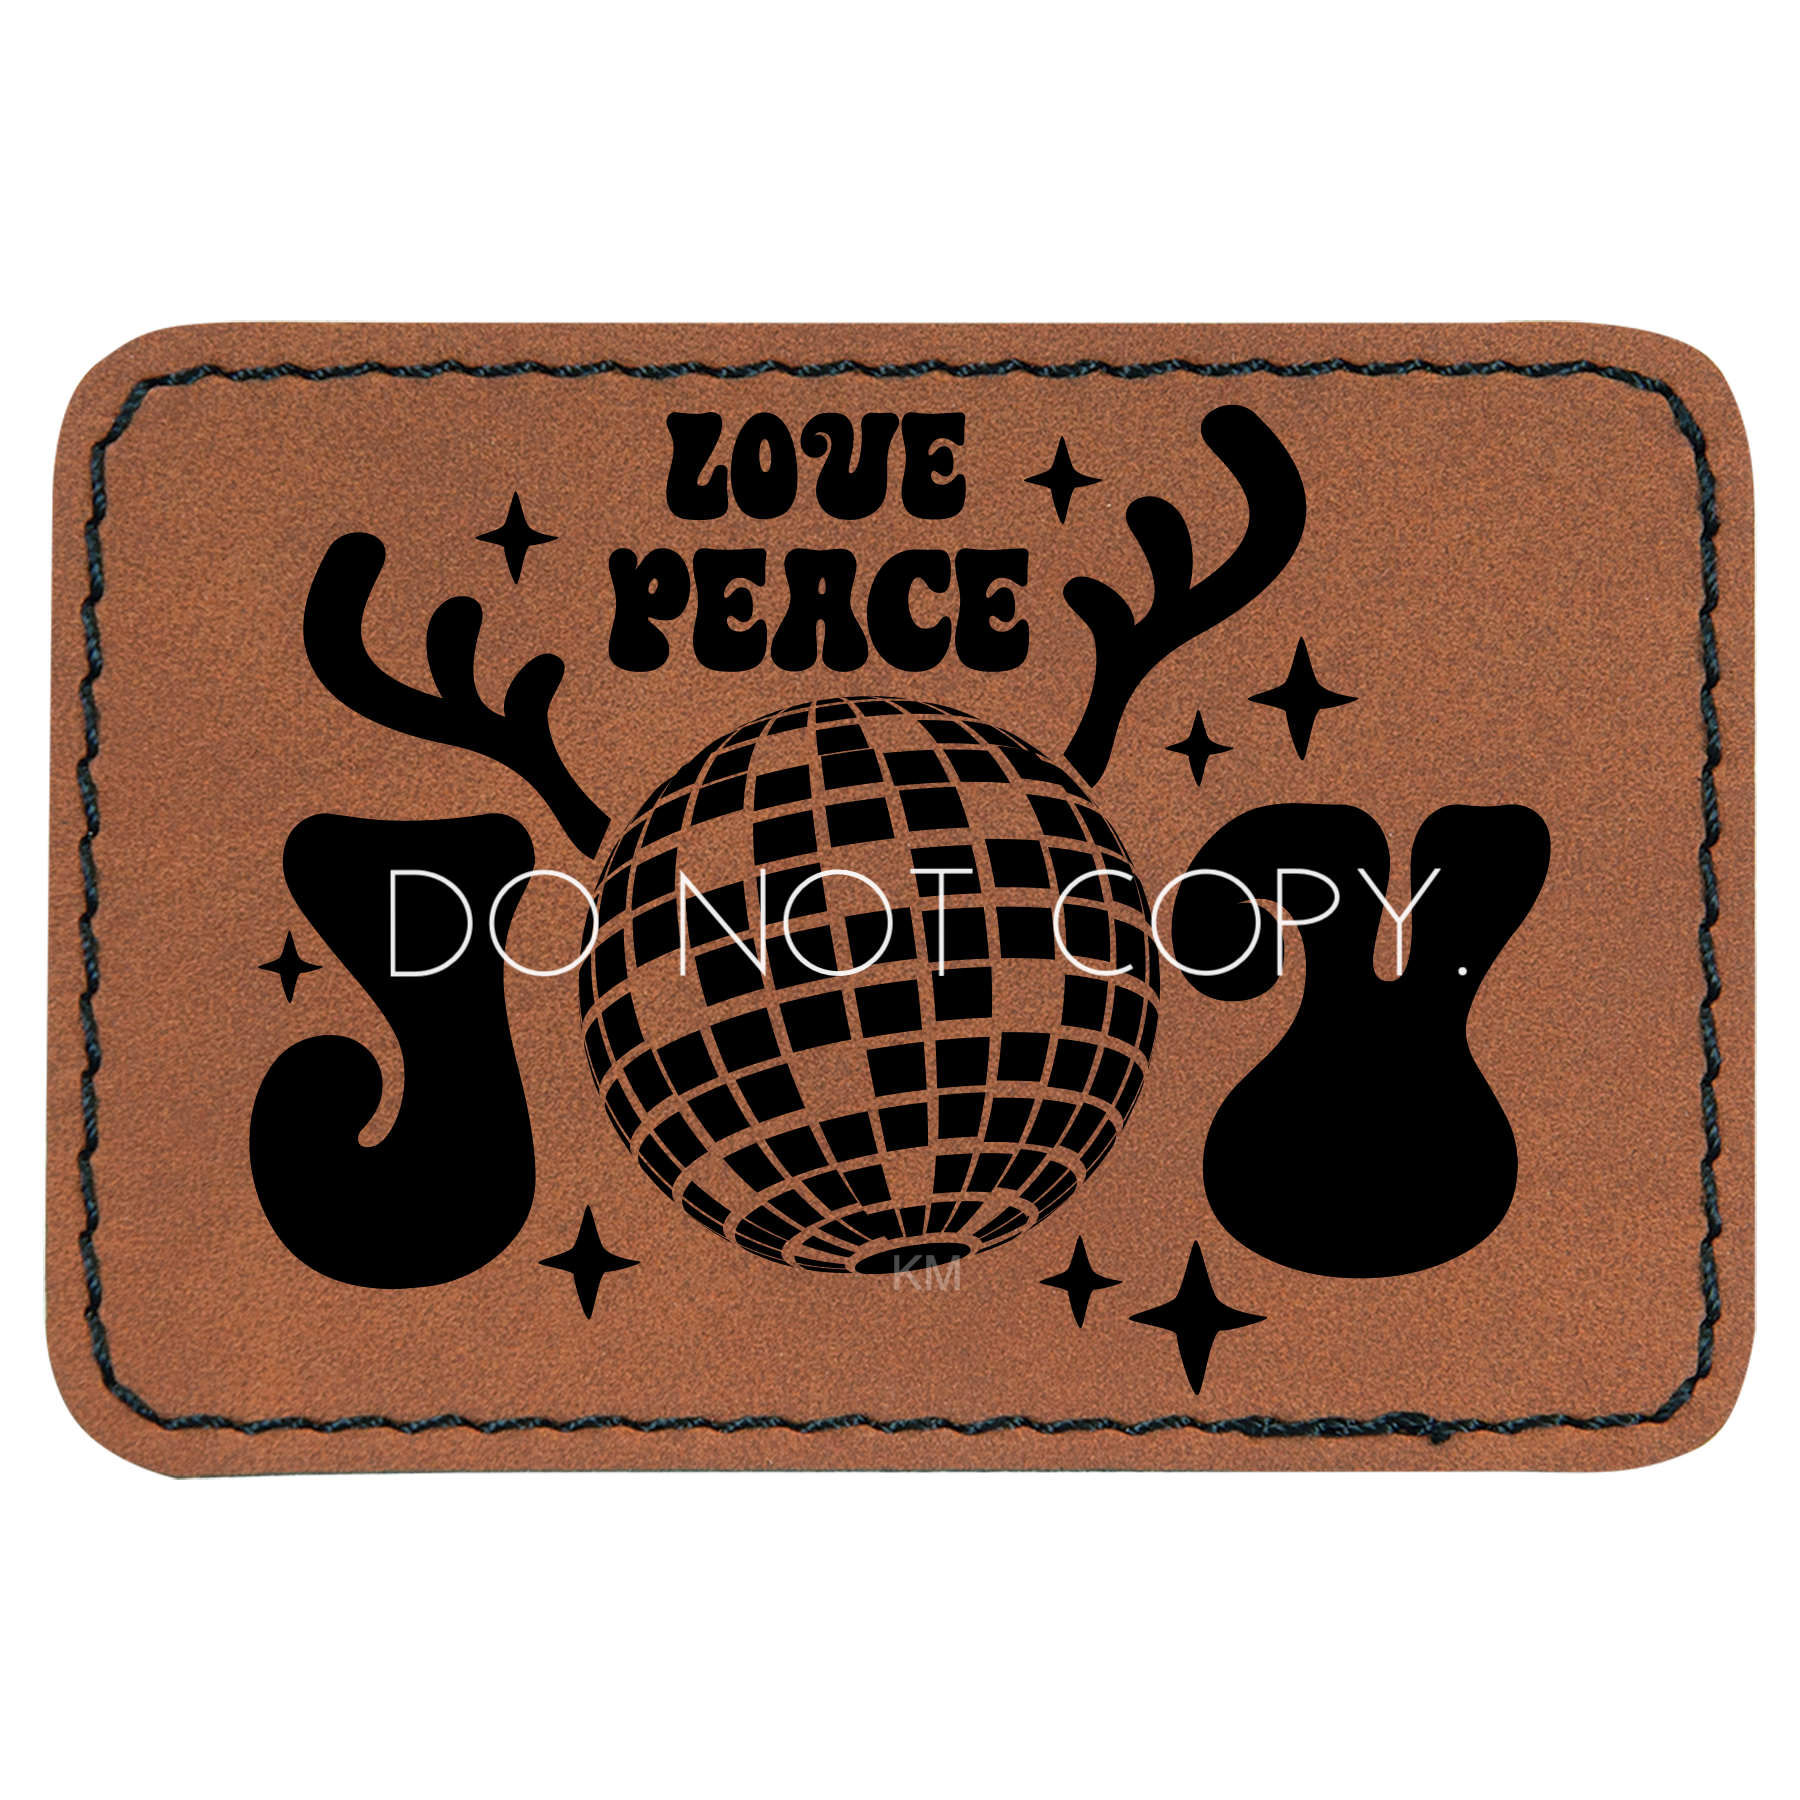 Love Peace Joy Patch